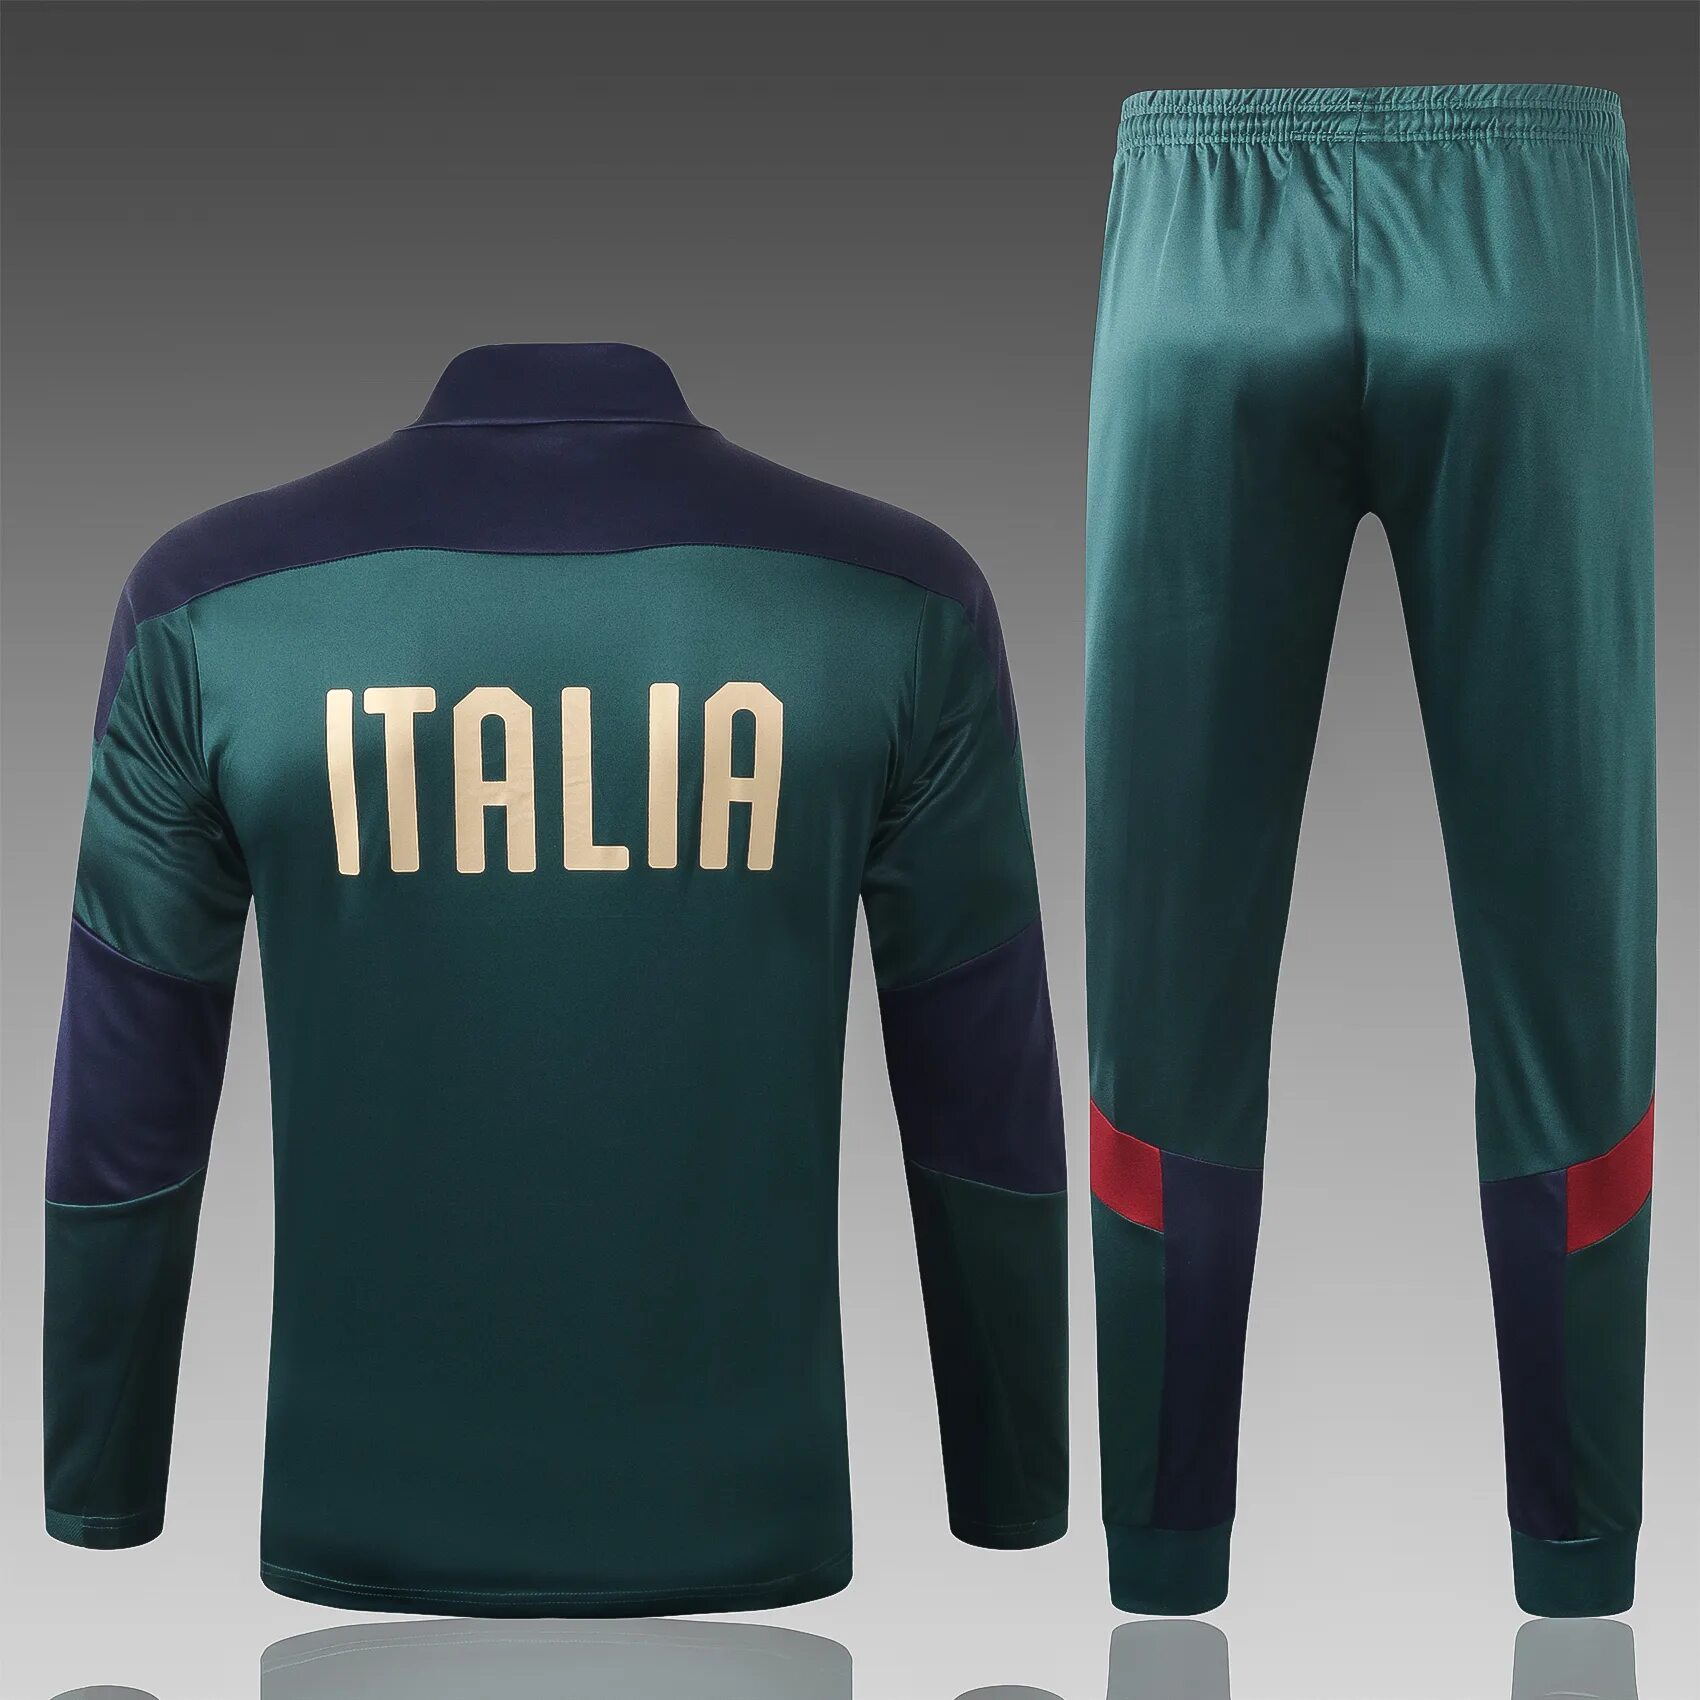 Спортивный костюм италия. Спортивный костюм Italia. Итальянский спортивный костюм. Спортивный костюм Italia мужской. Спортивный костюм мужской guies Italia.